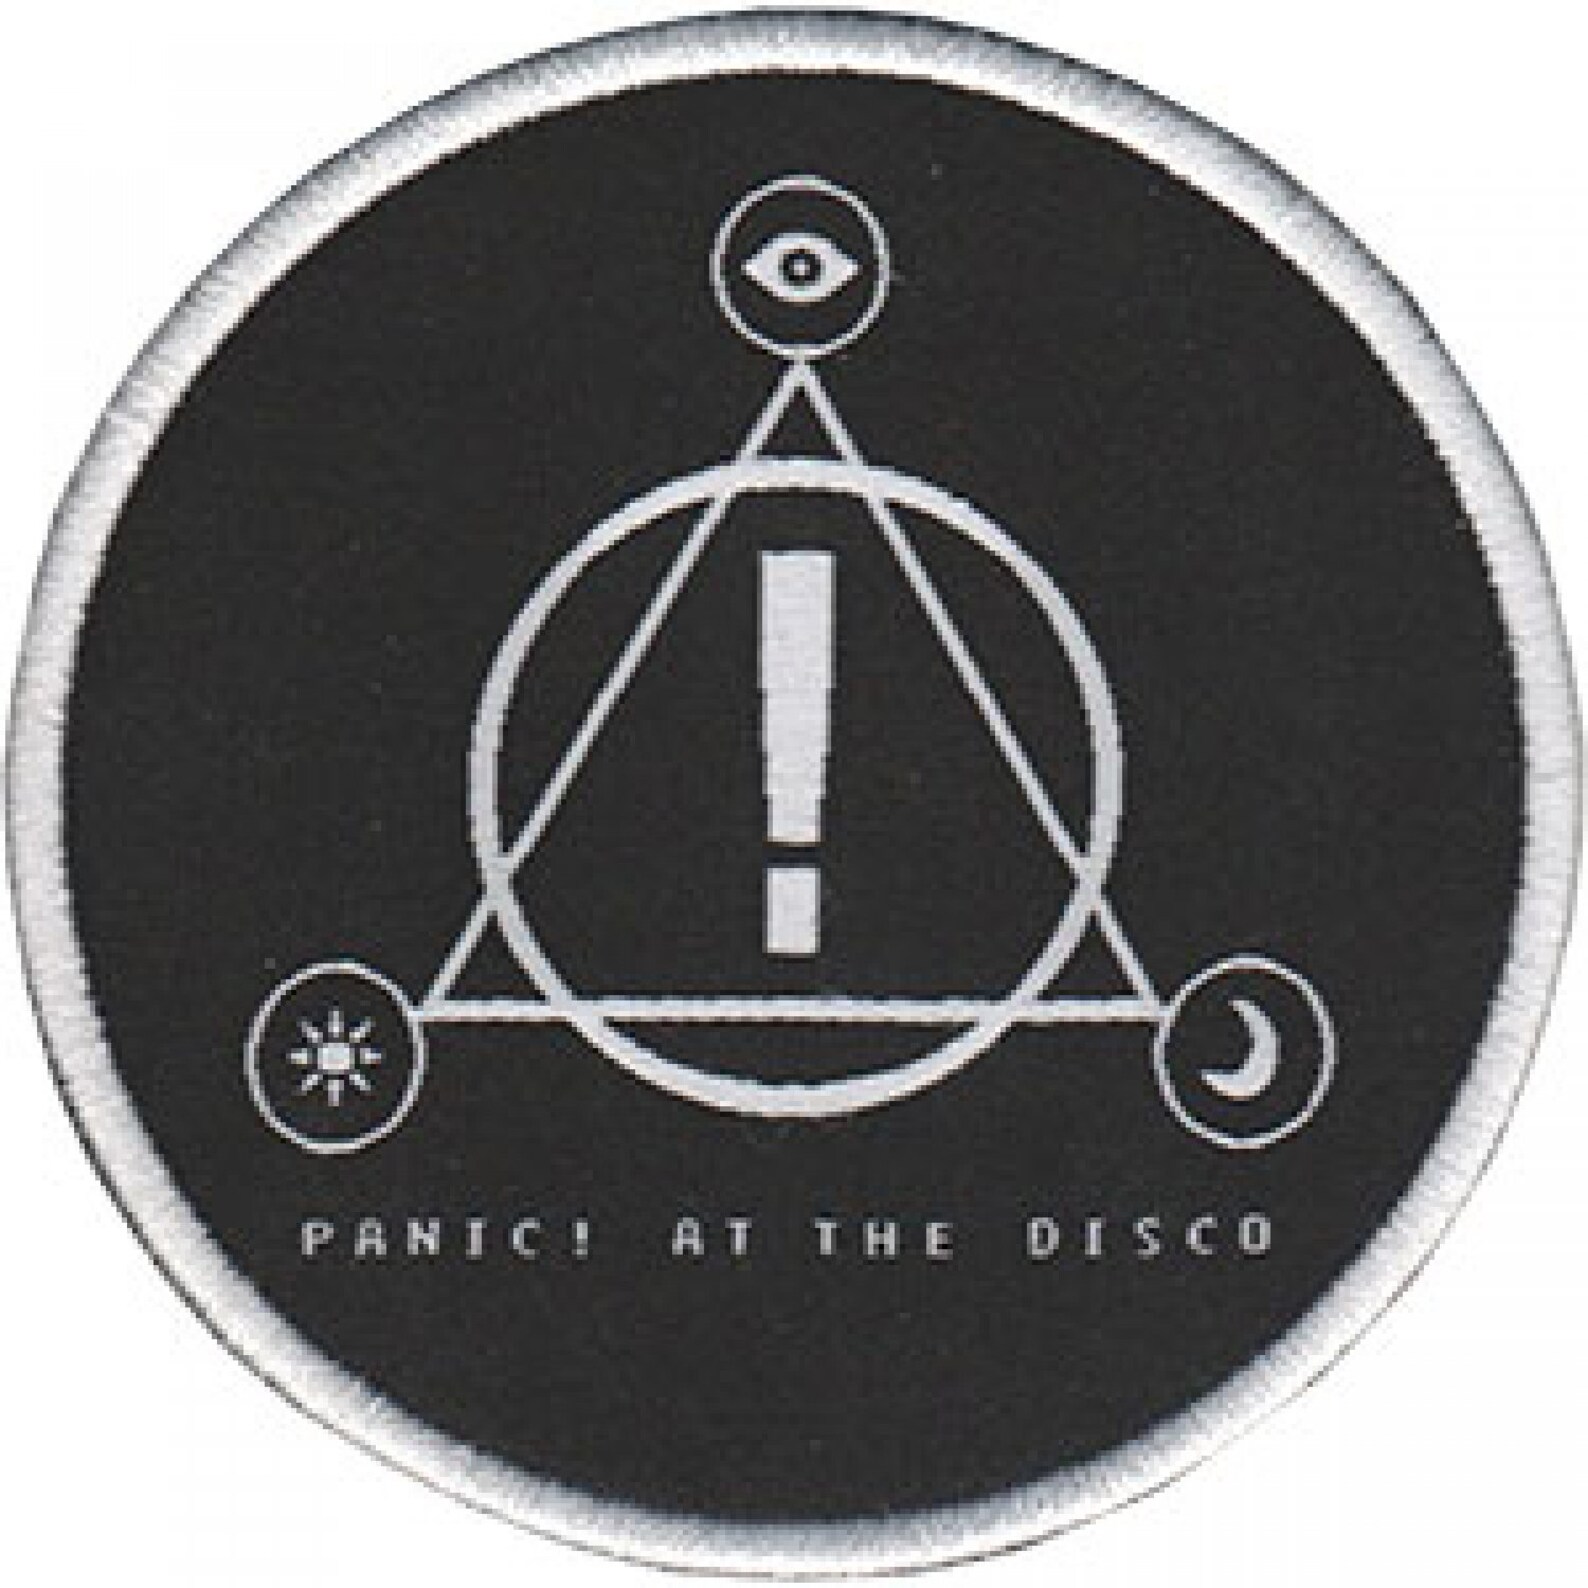 Panic at the disco new. Знак Panic at the Disco. Panic at the Disco логотип. Паник эт зе диско логотип. Логотипы музыкальных групп Panic at the Disco.